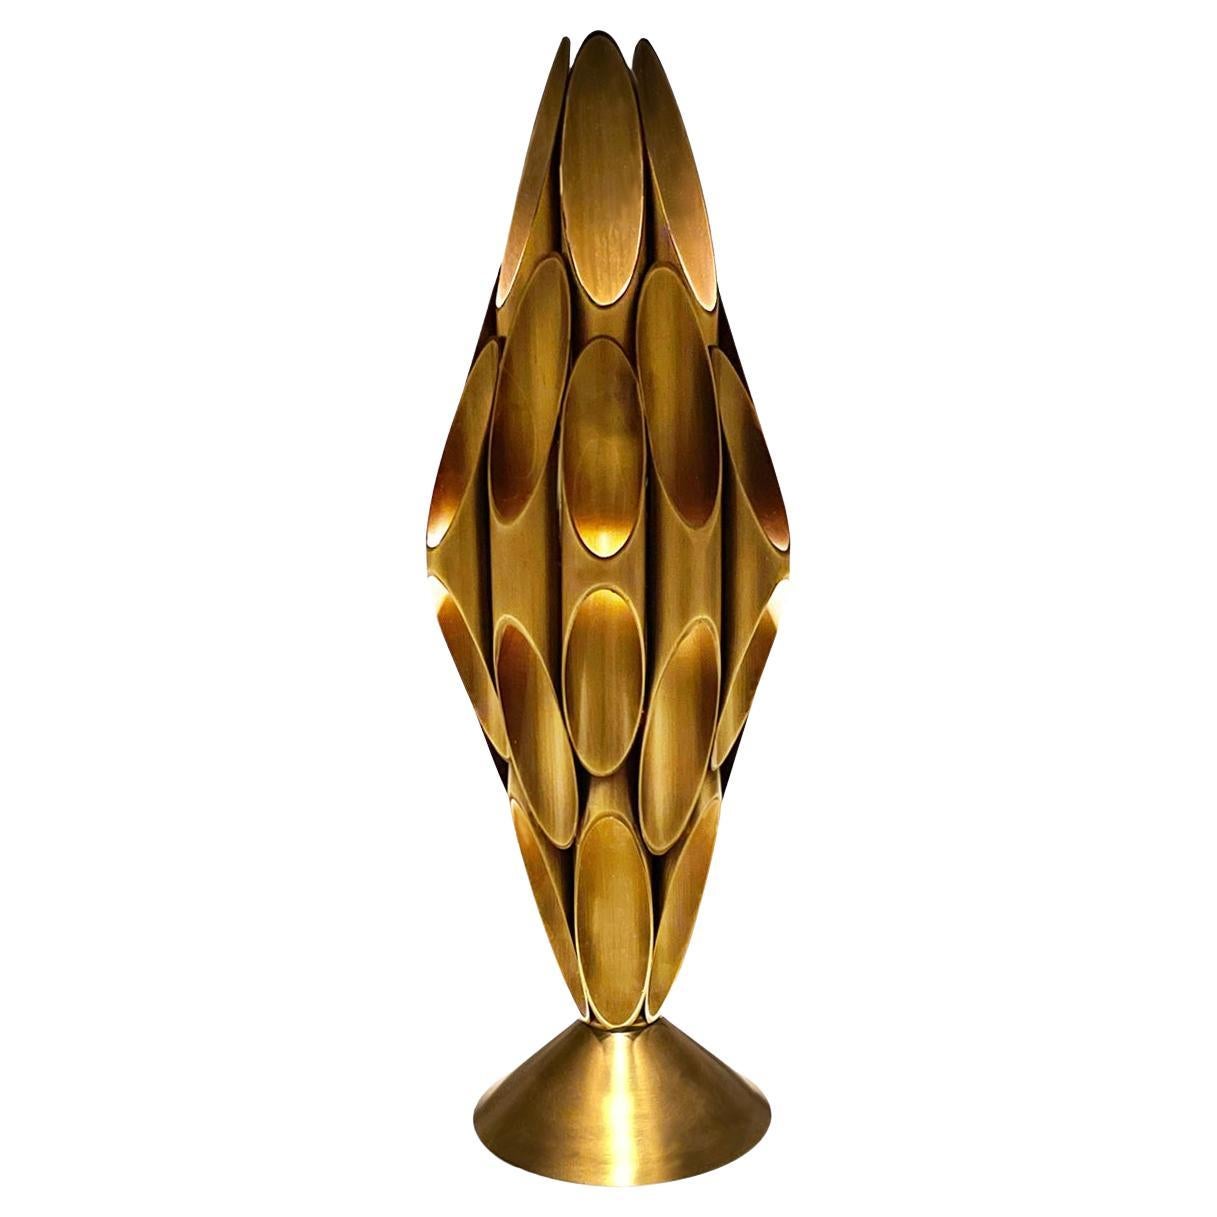 Hollywood Regency Tubular Table Sculpture Brass Accent Lamp after Mastercraft